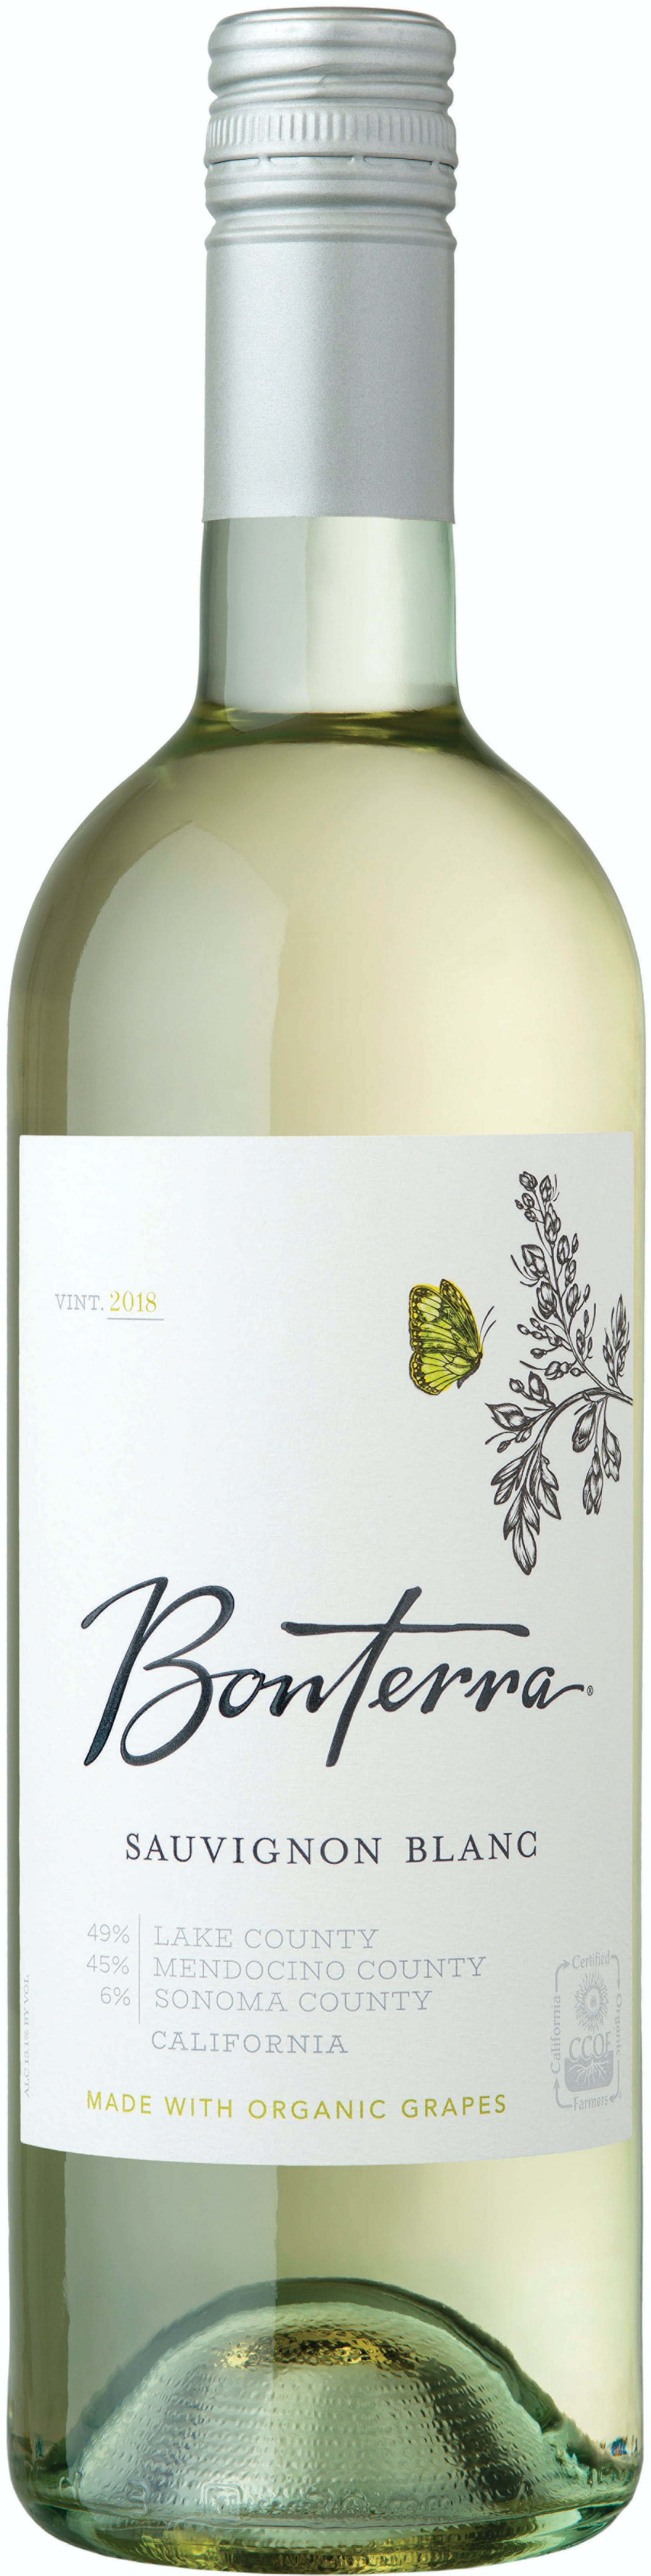 images/wine/WHITE WINE/Bonterra Sauvignon Blanc.jpg